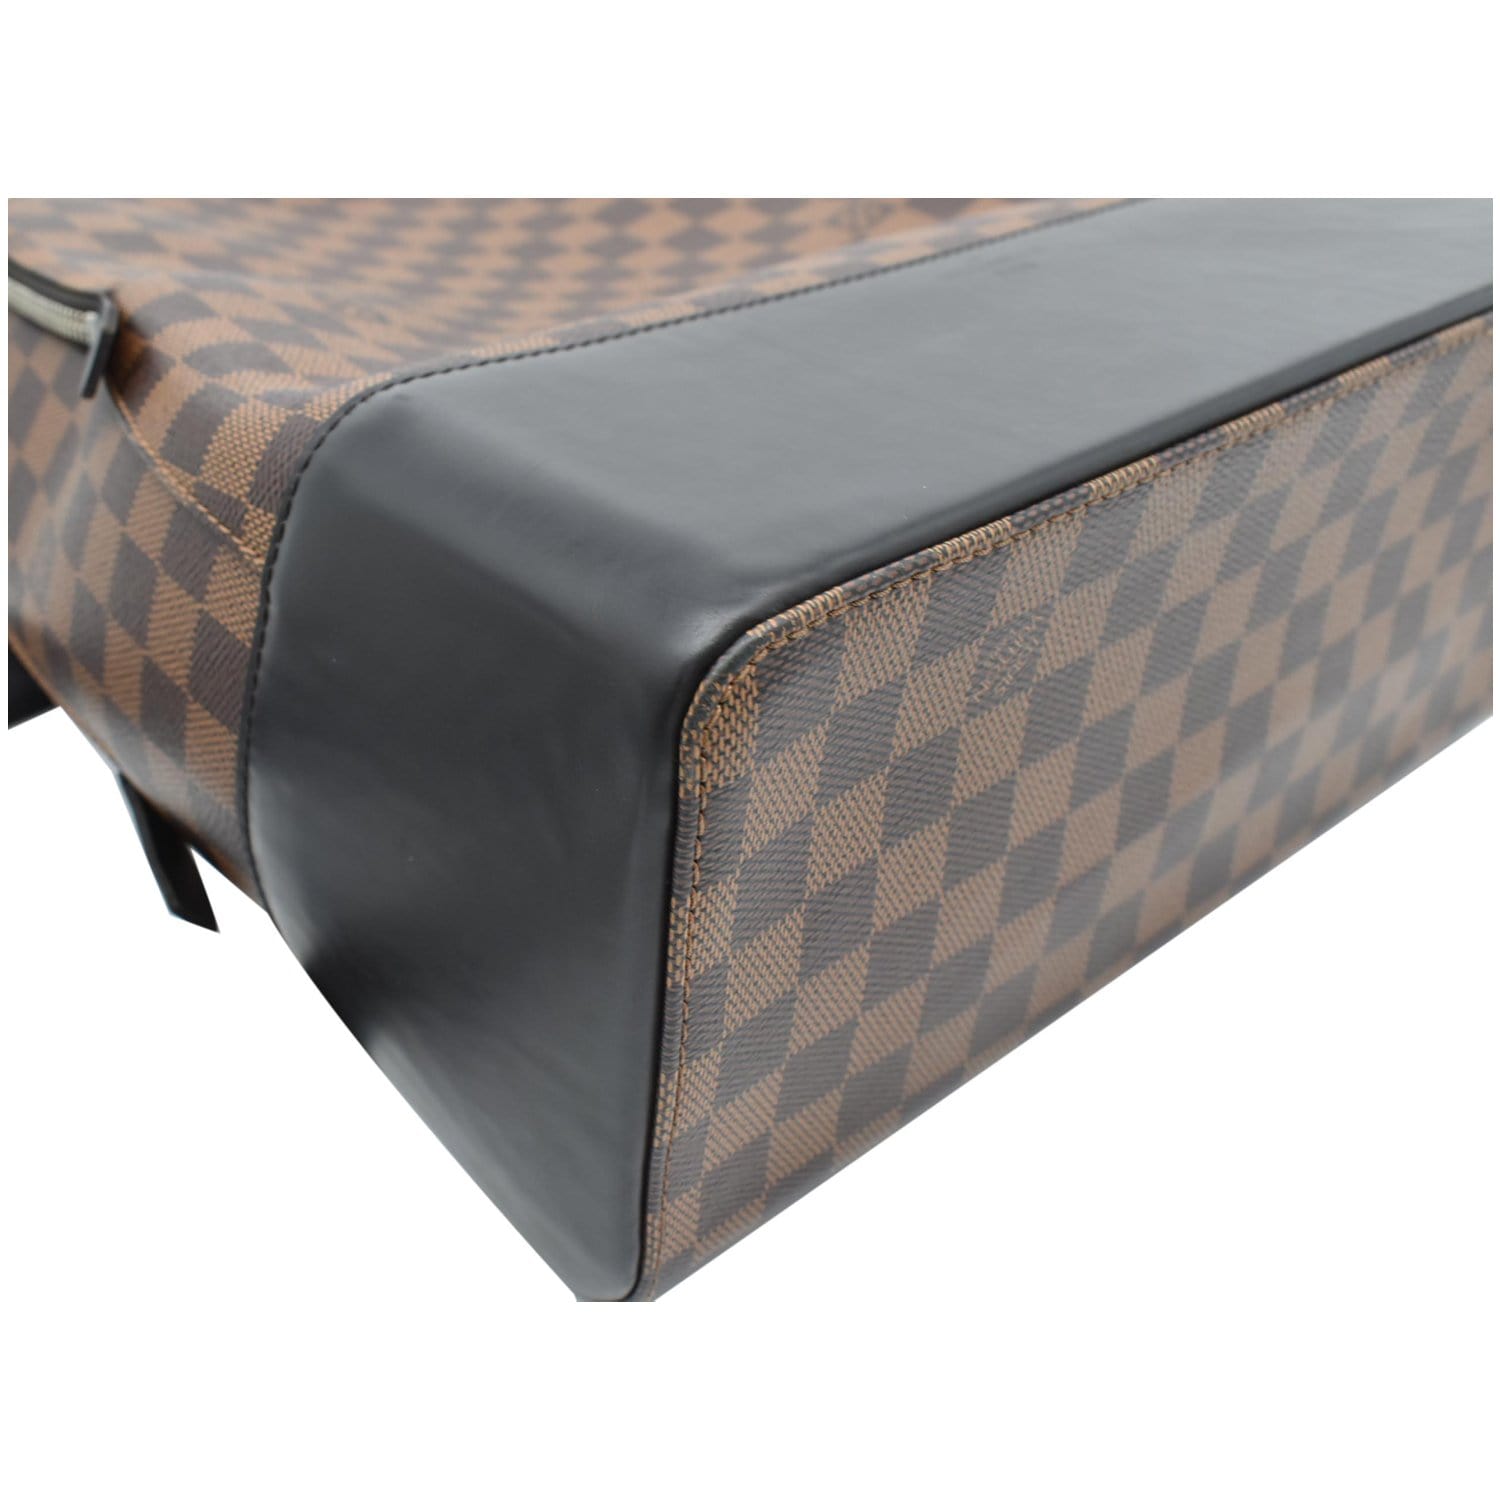 Louis Vuitton Editions Limitées Handbag 381243, Backpack JACK&JONES  Jacliam 12188645 Navy Peony